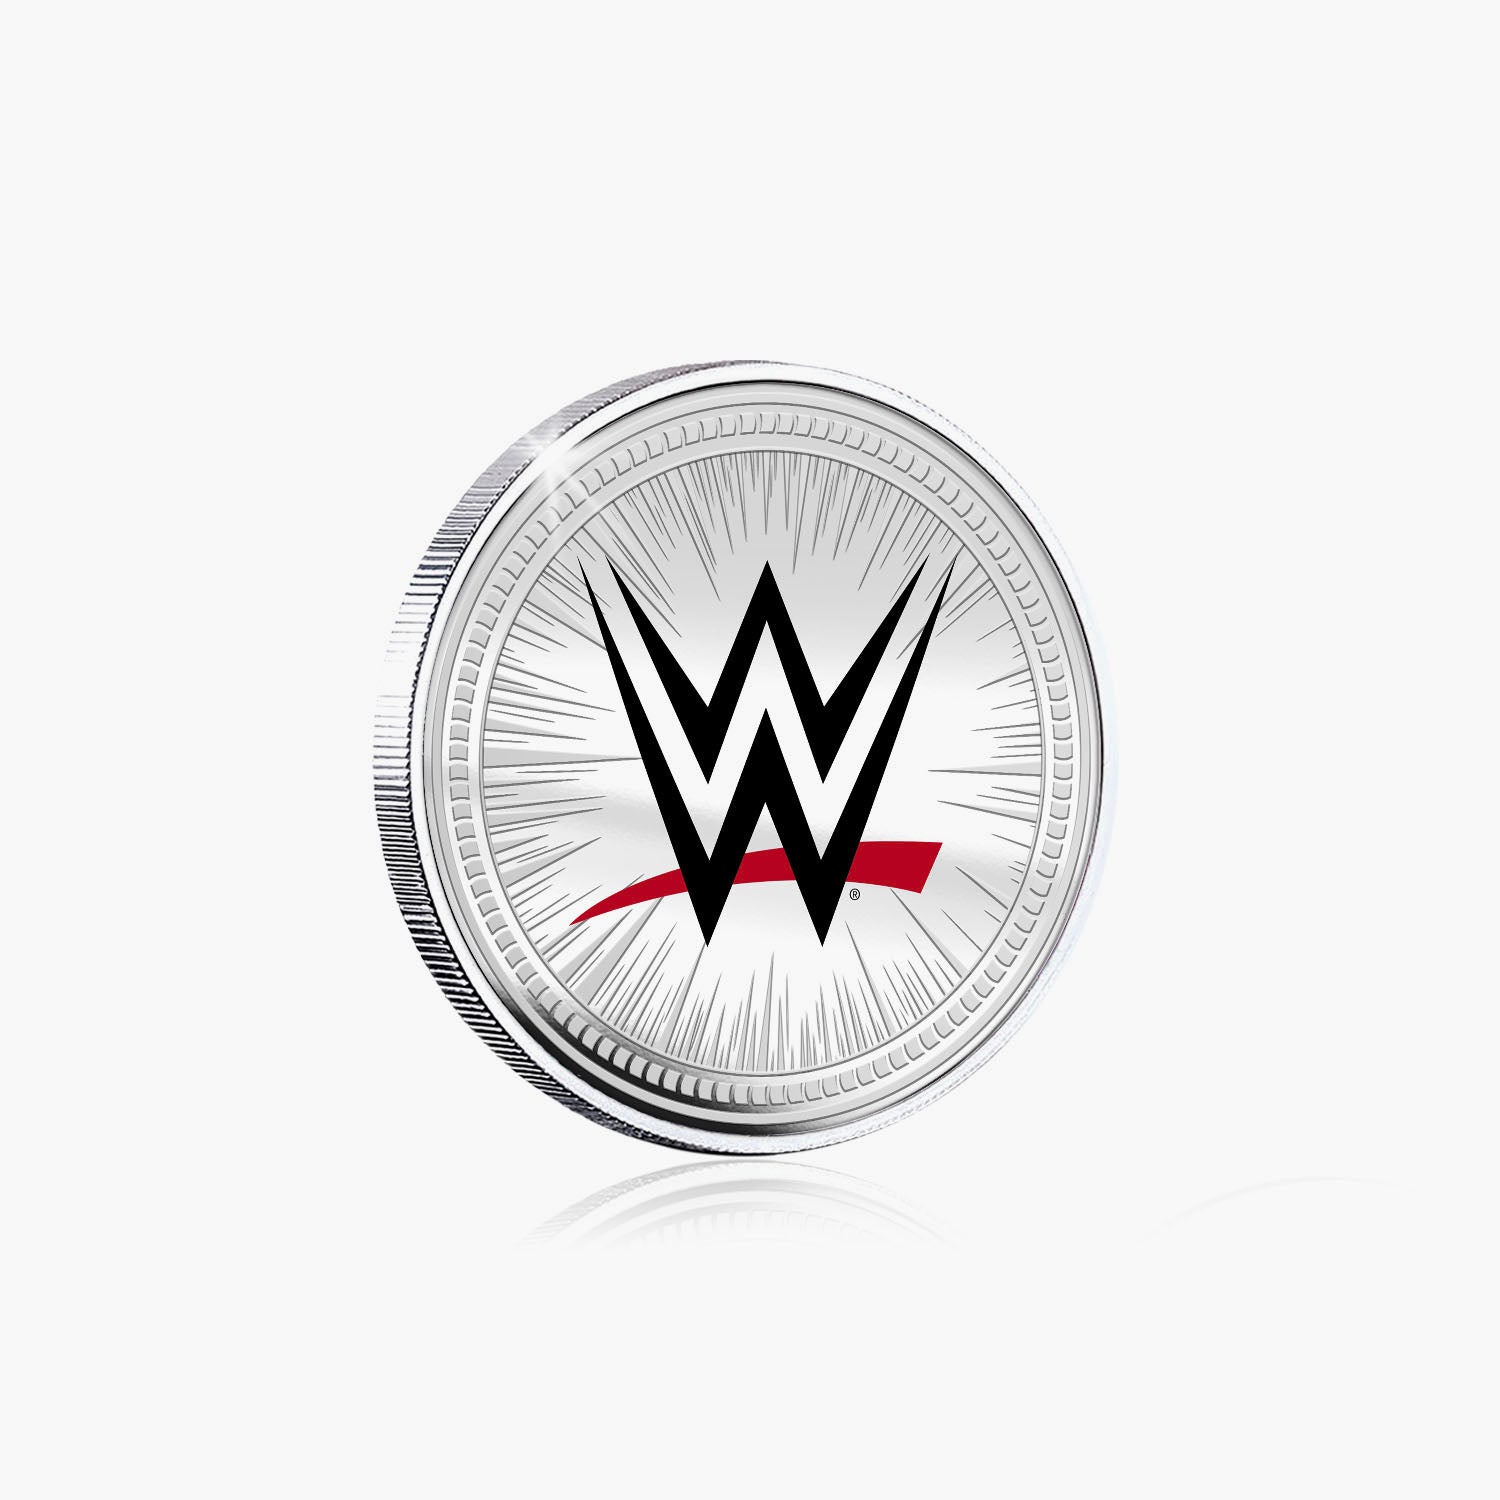 WWE Commemorative Collection - Trish Stratus - 32mm Silver Plated Commemorative